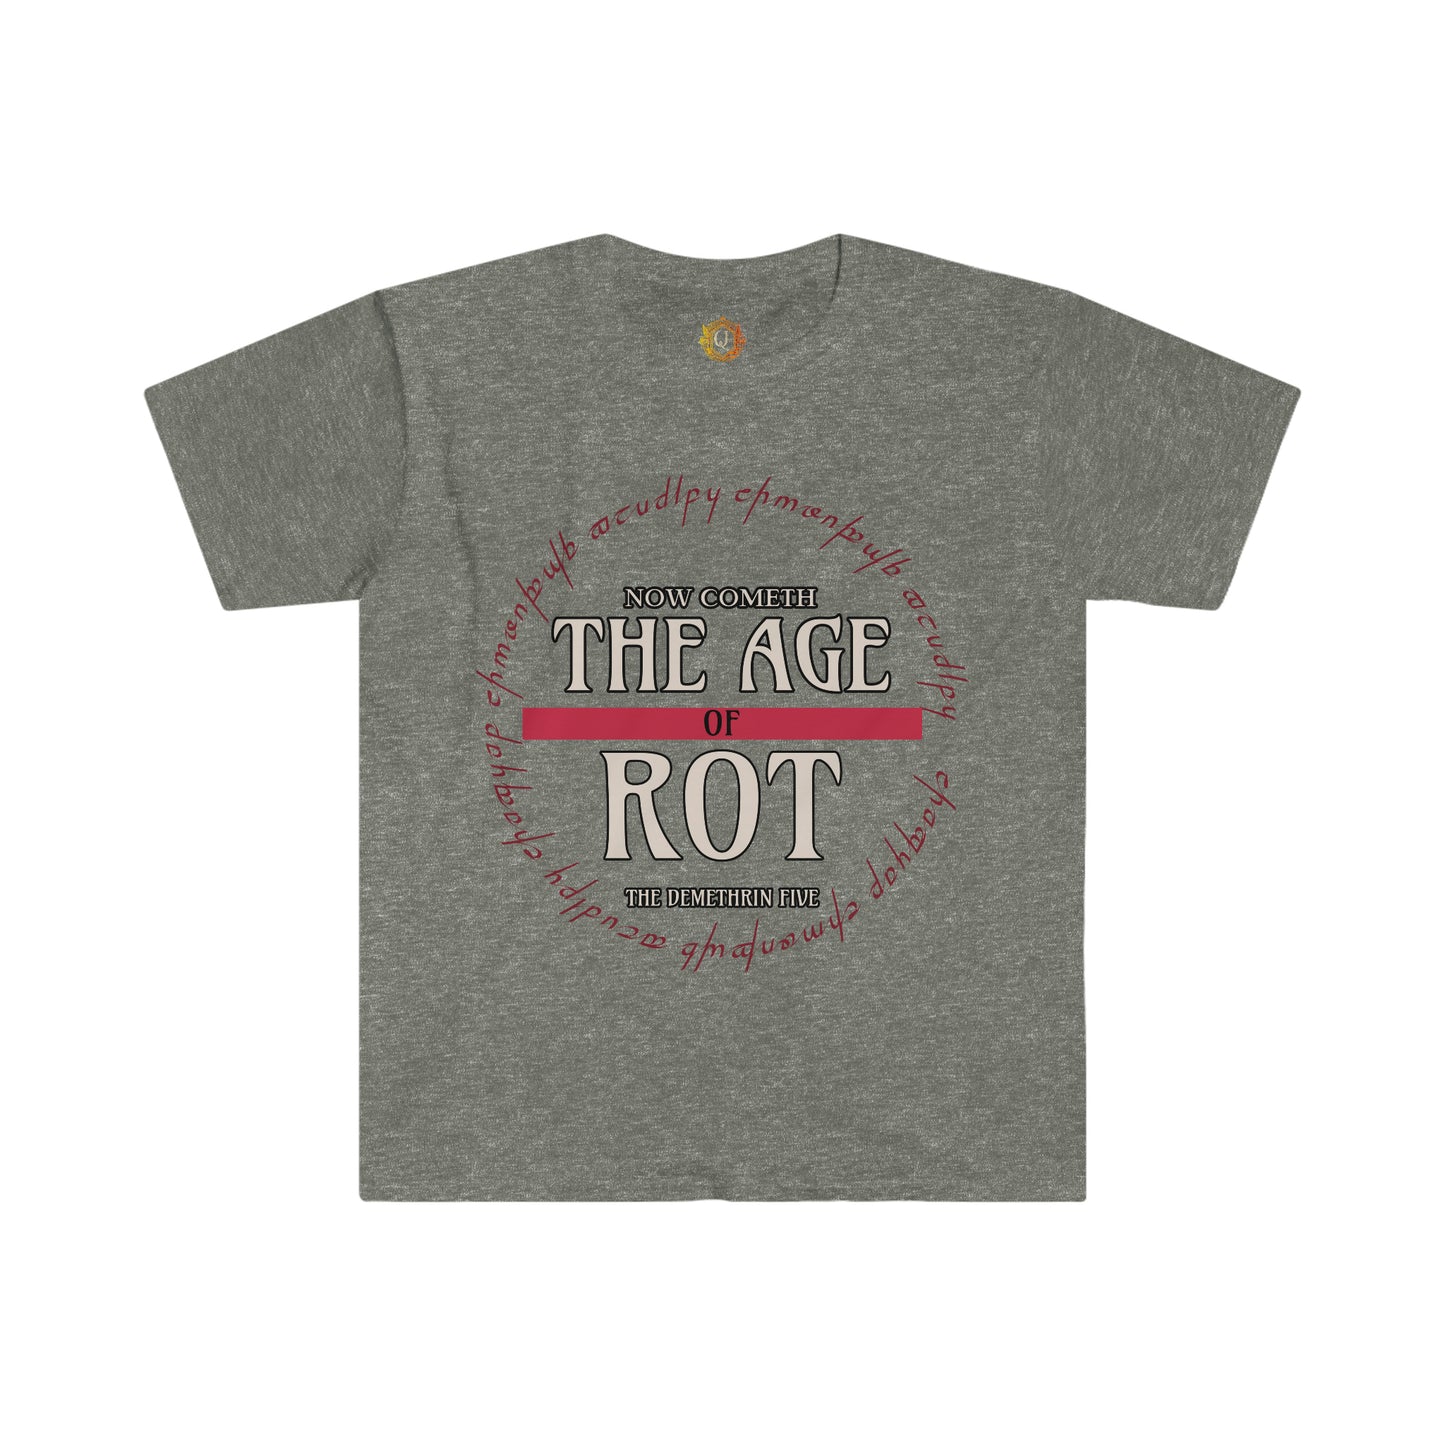 Demethrin "Age Of Rot" T-Shirt